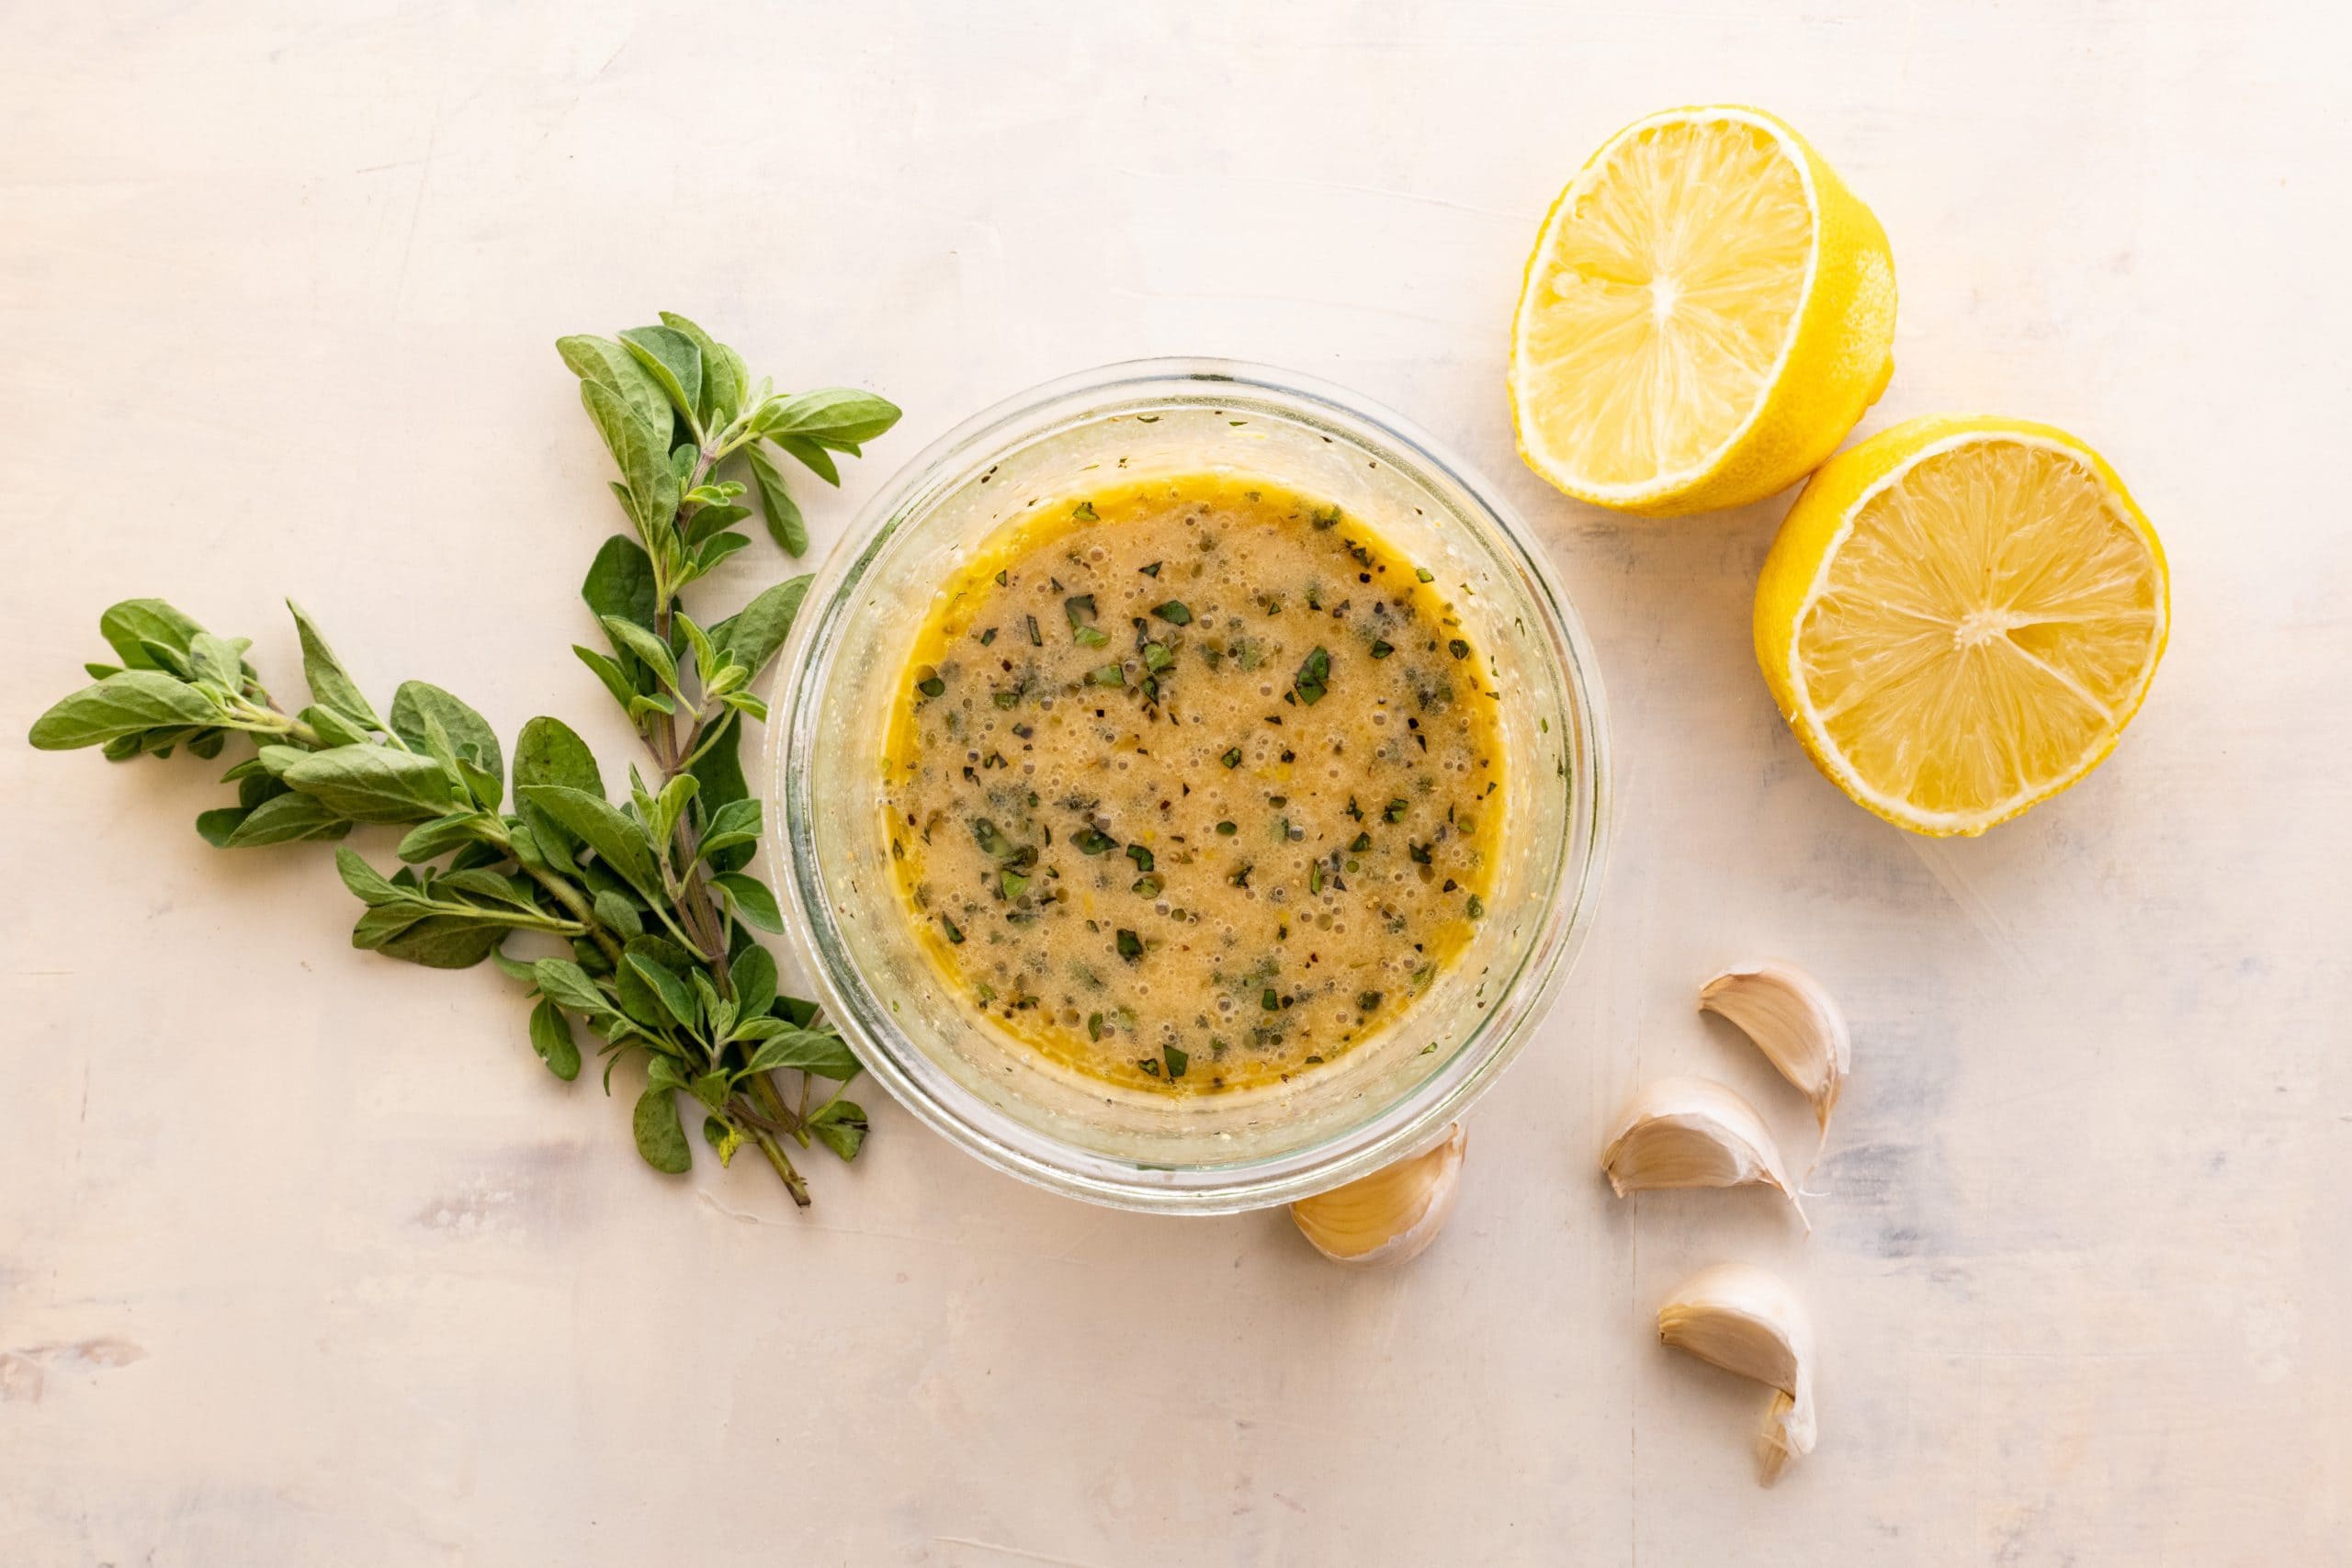 Birdseye view of simple lemon vinaigrette in a jar with fresh oregano, lemon, and garlic cloves around.